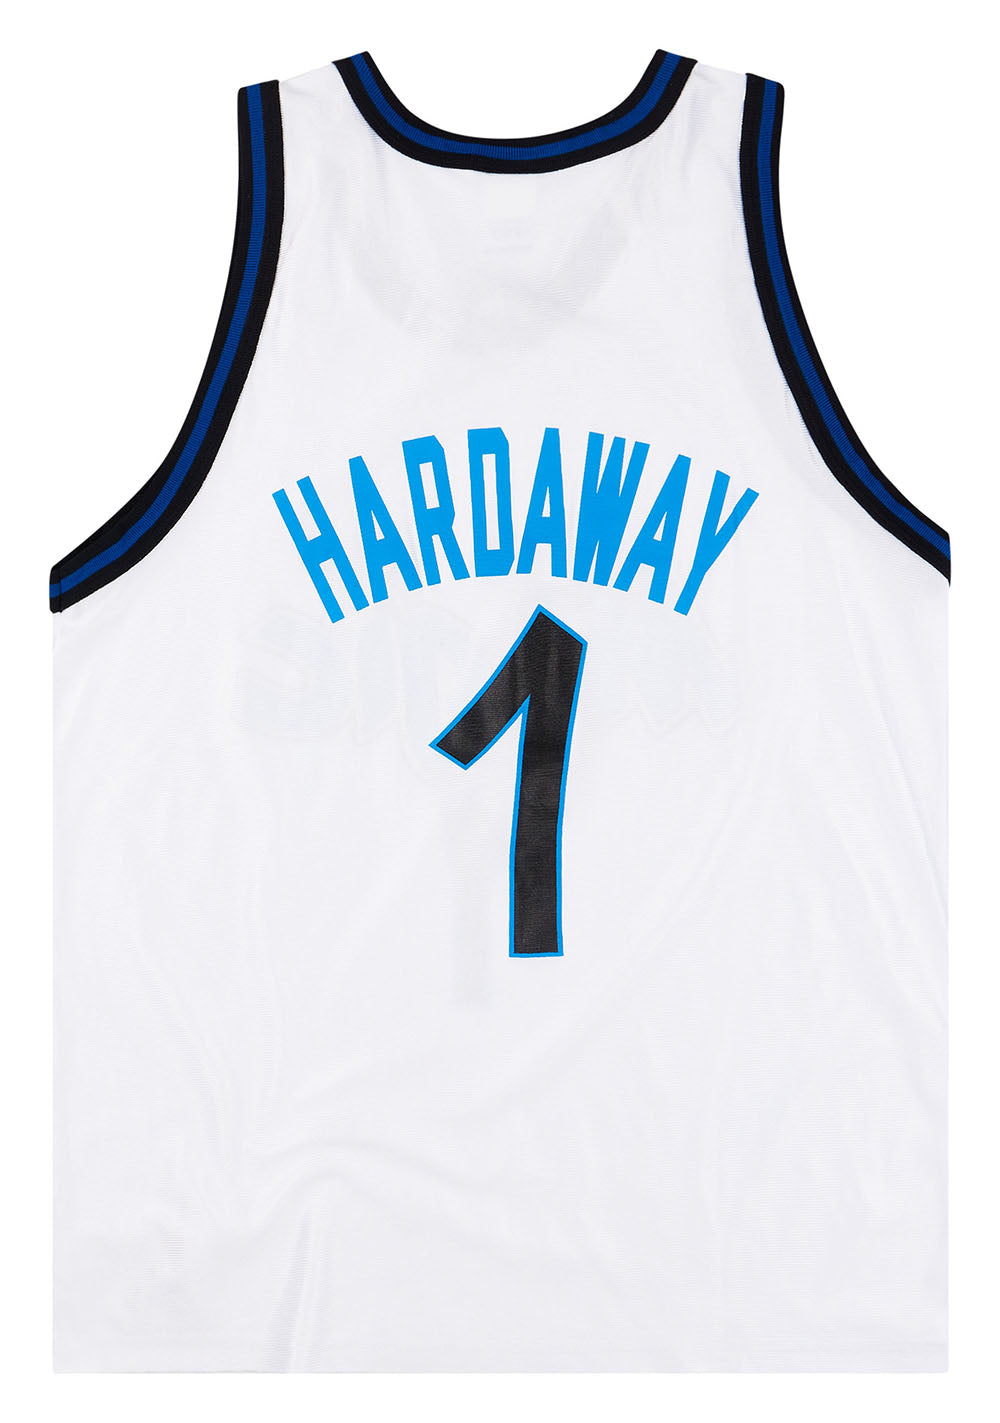 Penny Hardaway Orlando Magic Champion Basketball Jersey (18-20)